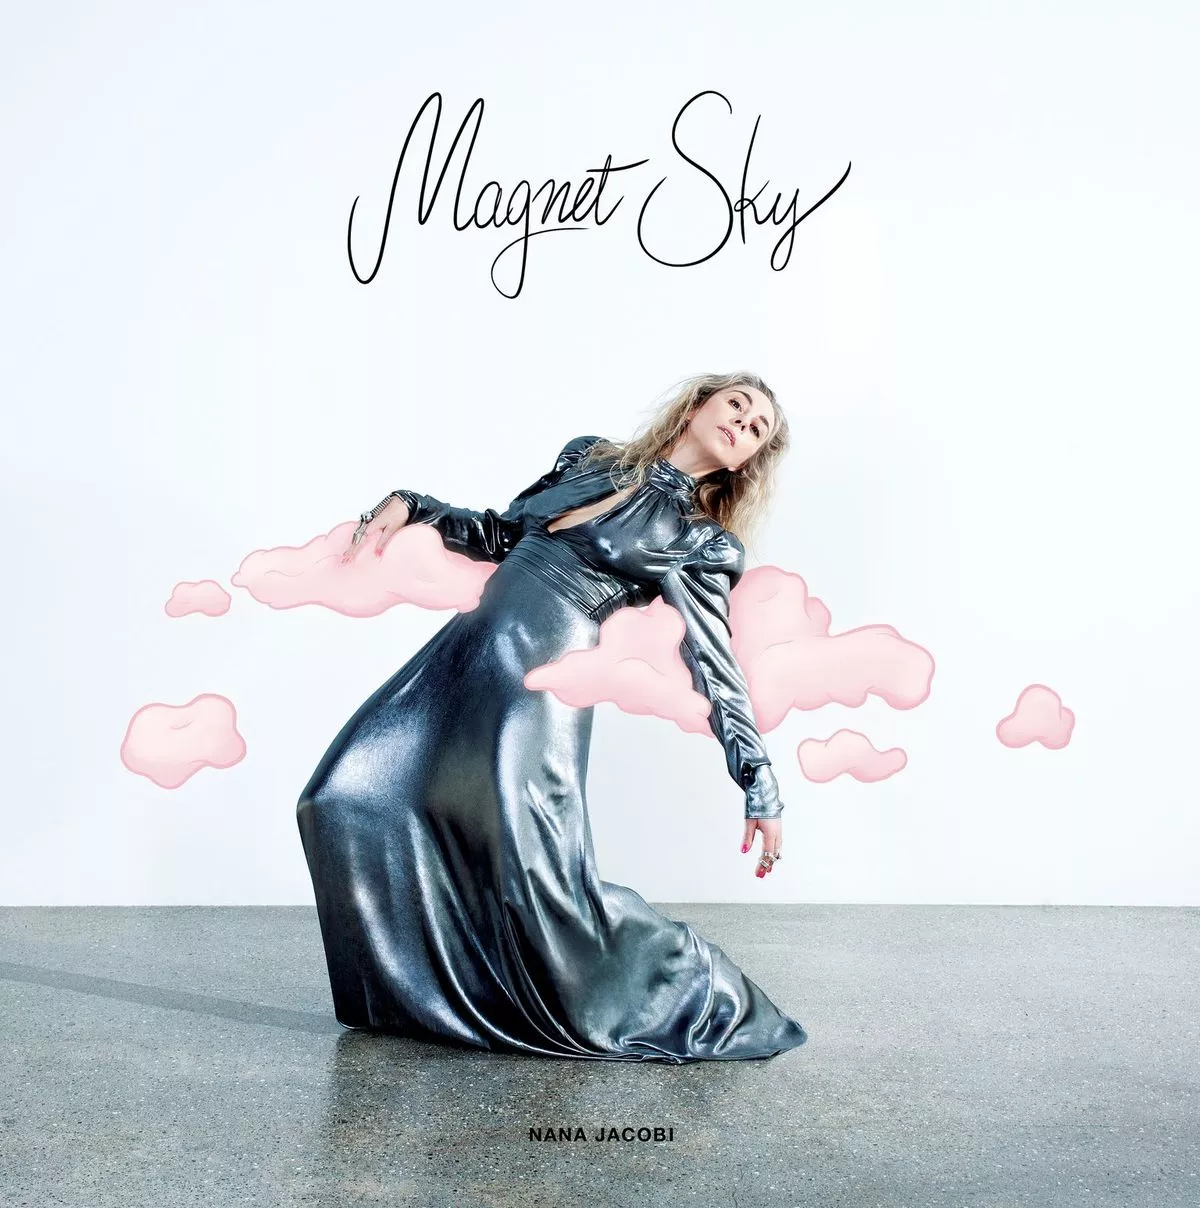 Magnet Sky - Nana Jacobi